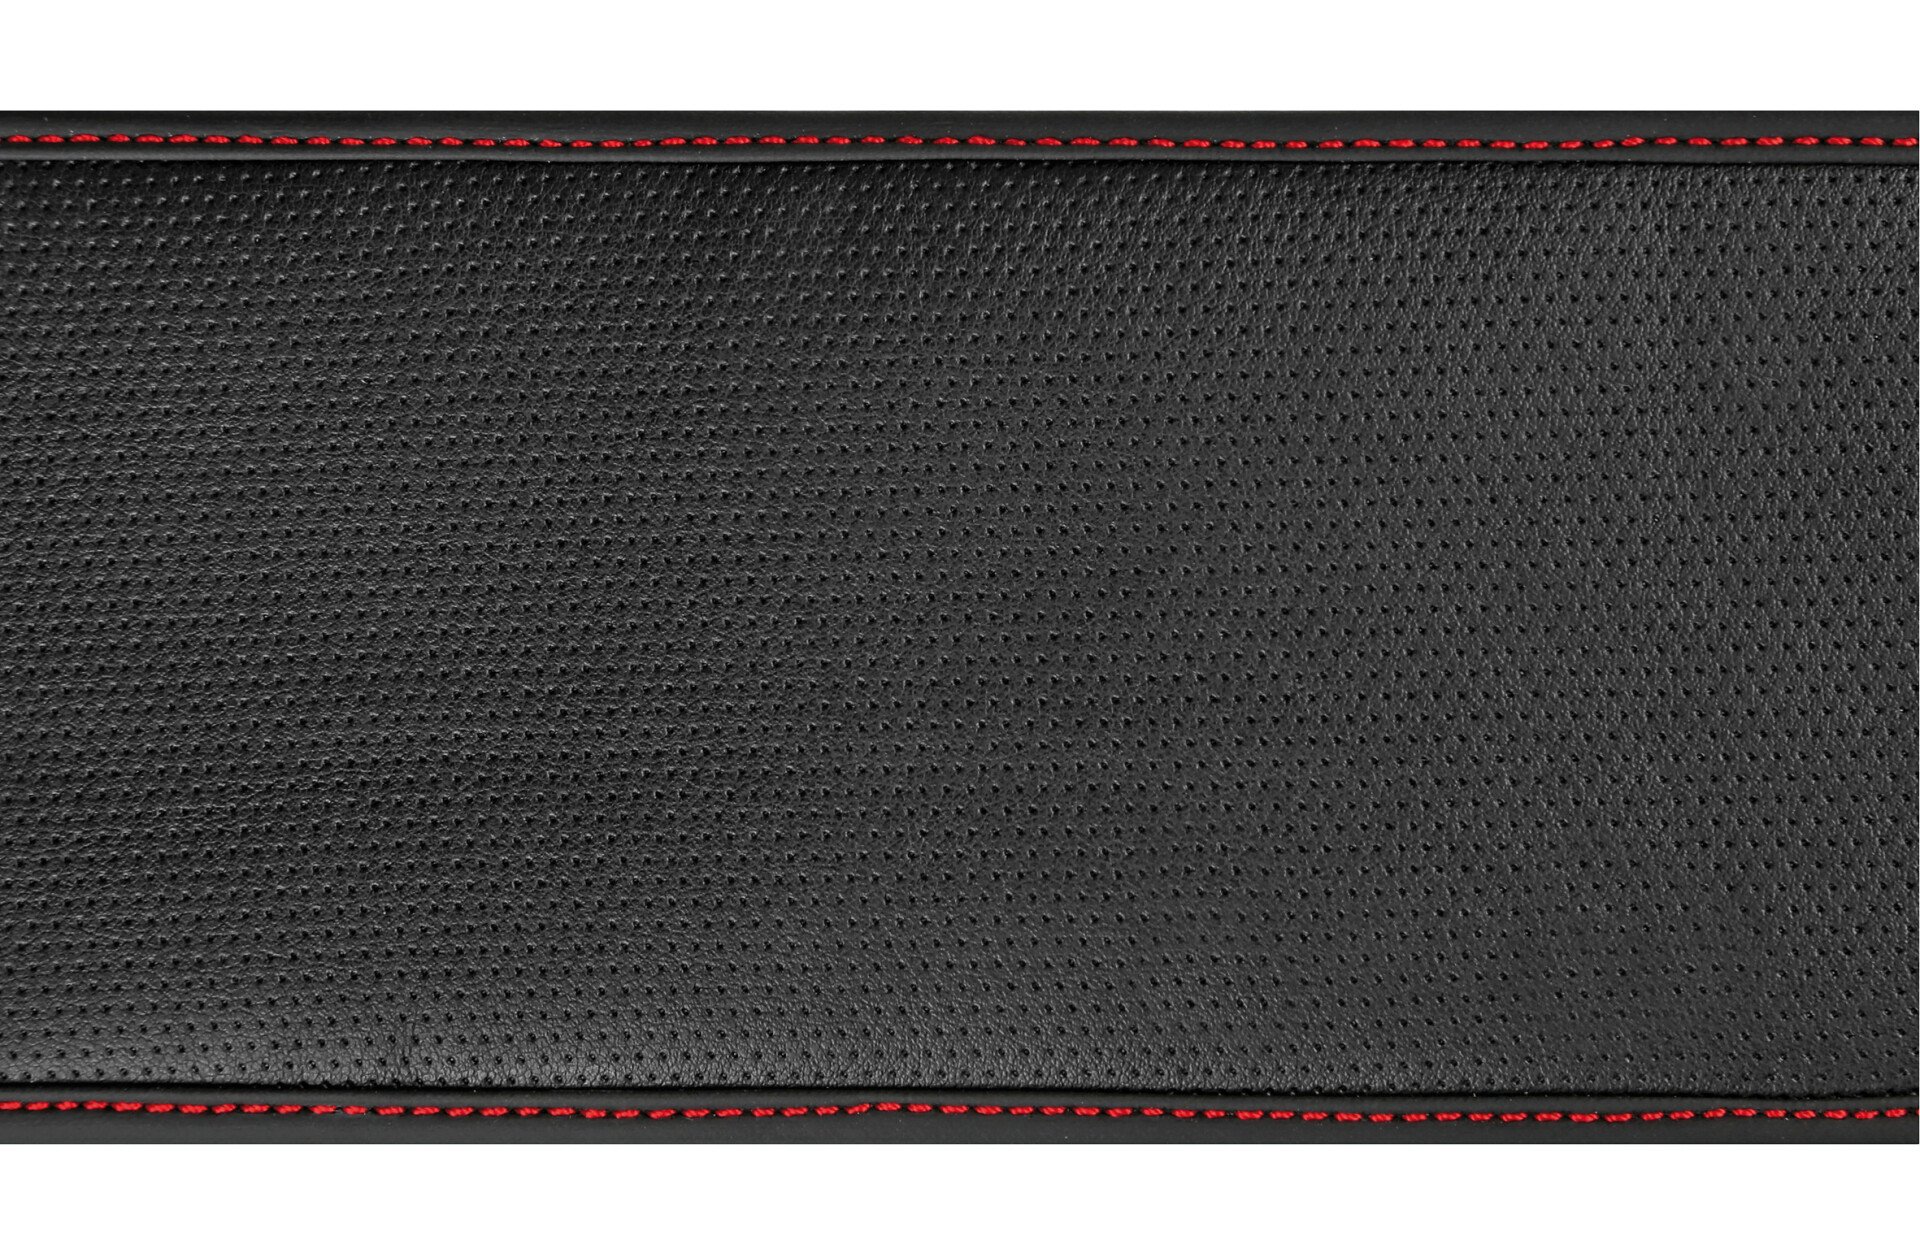 Skin-Cover, elasticized steering wheel cover - Black/Red - M - Ø 38/40 cm thumb